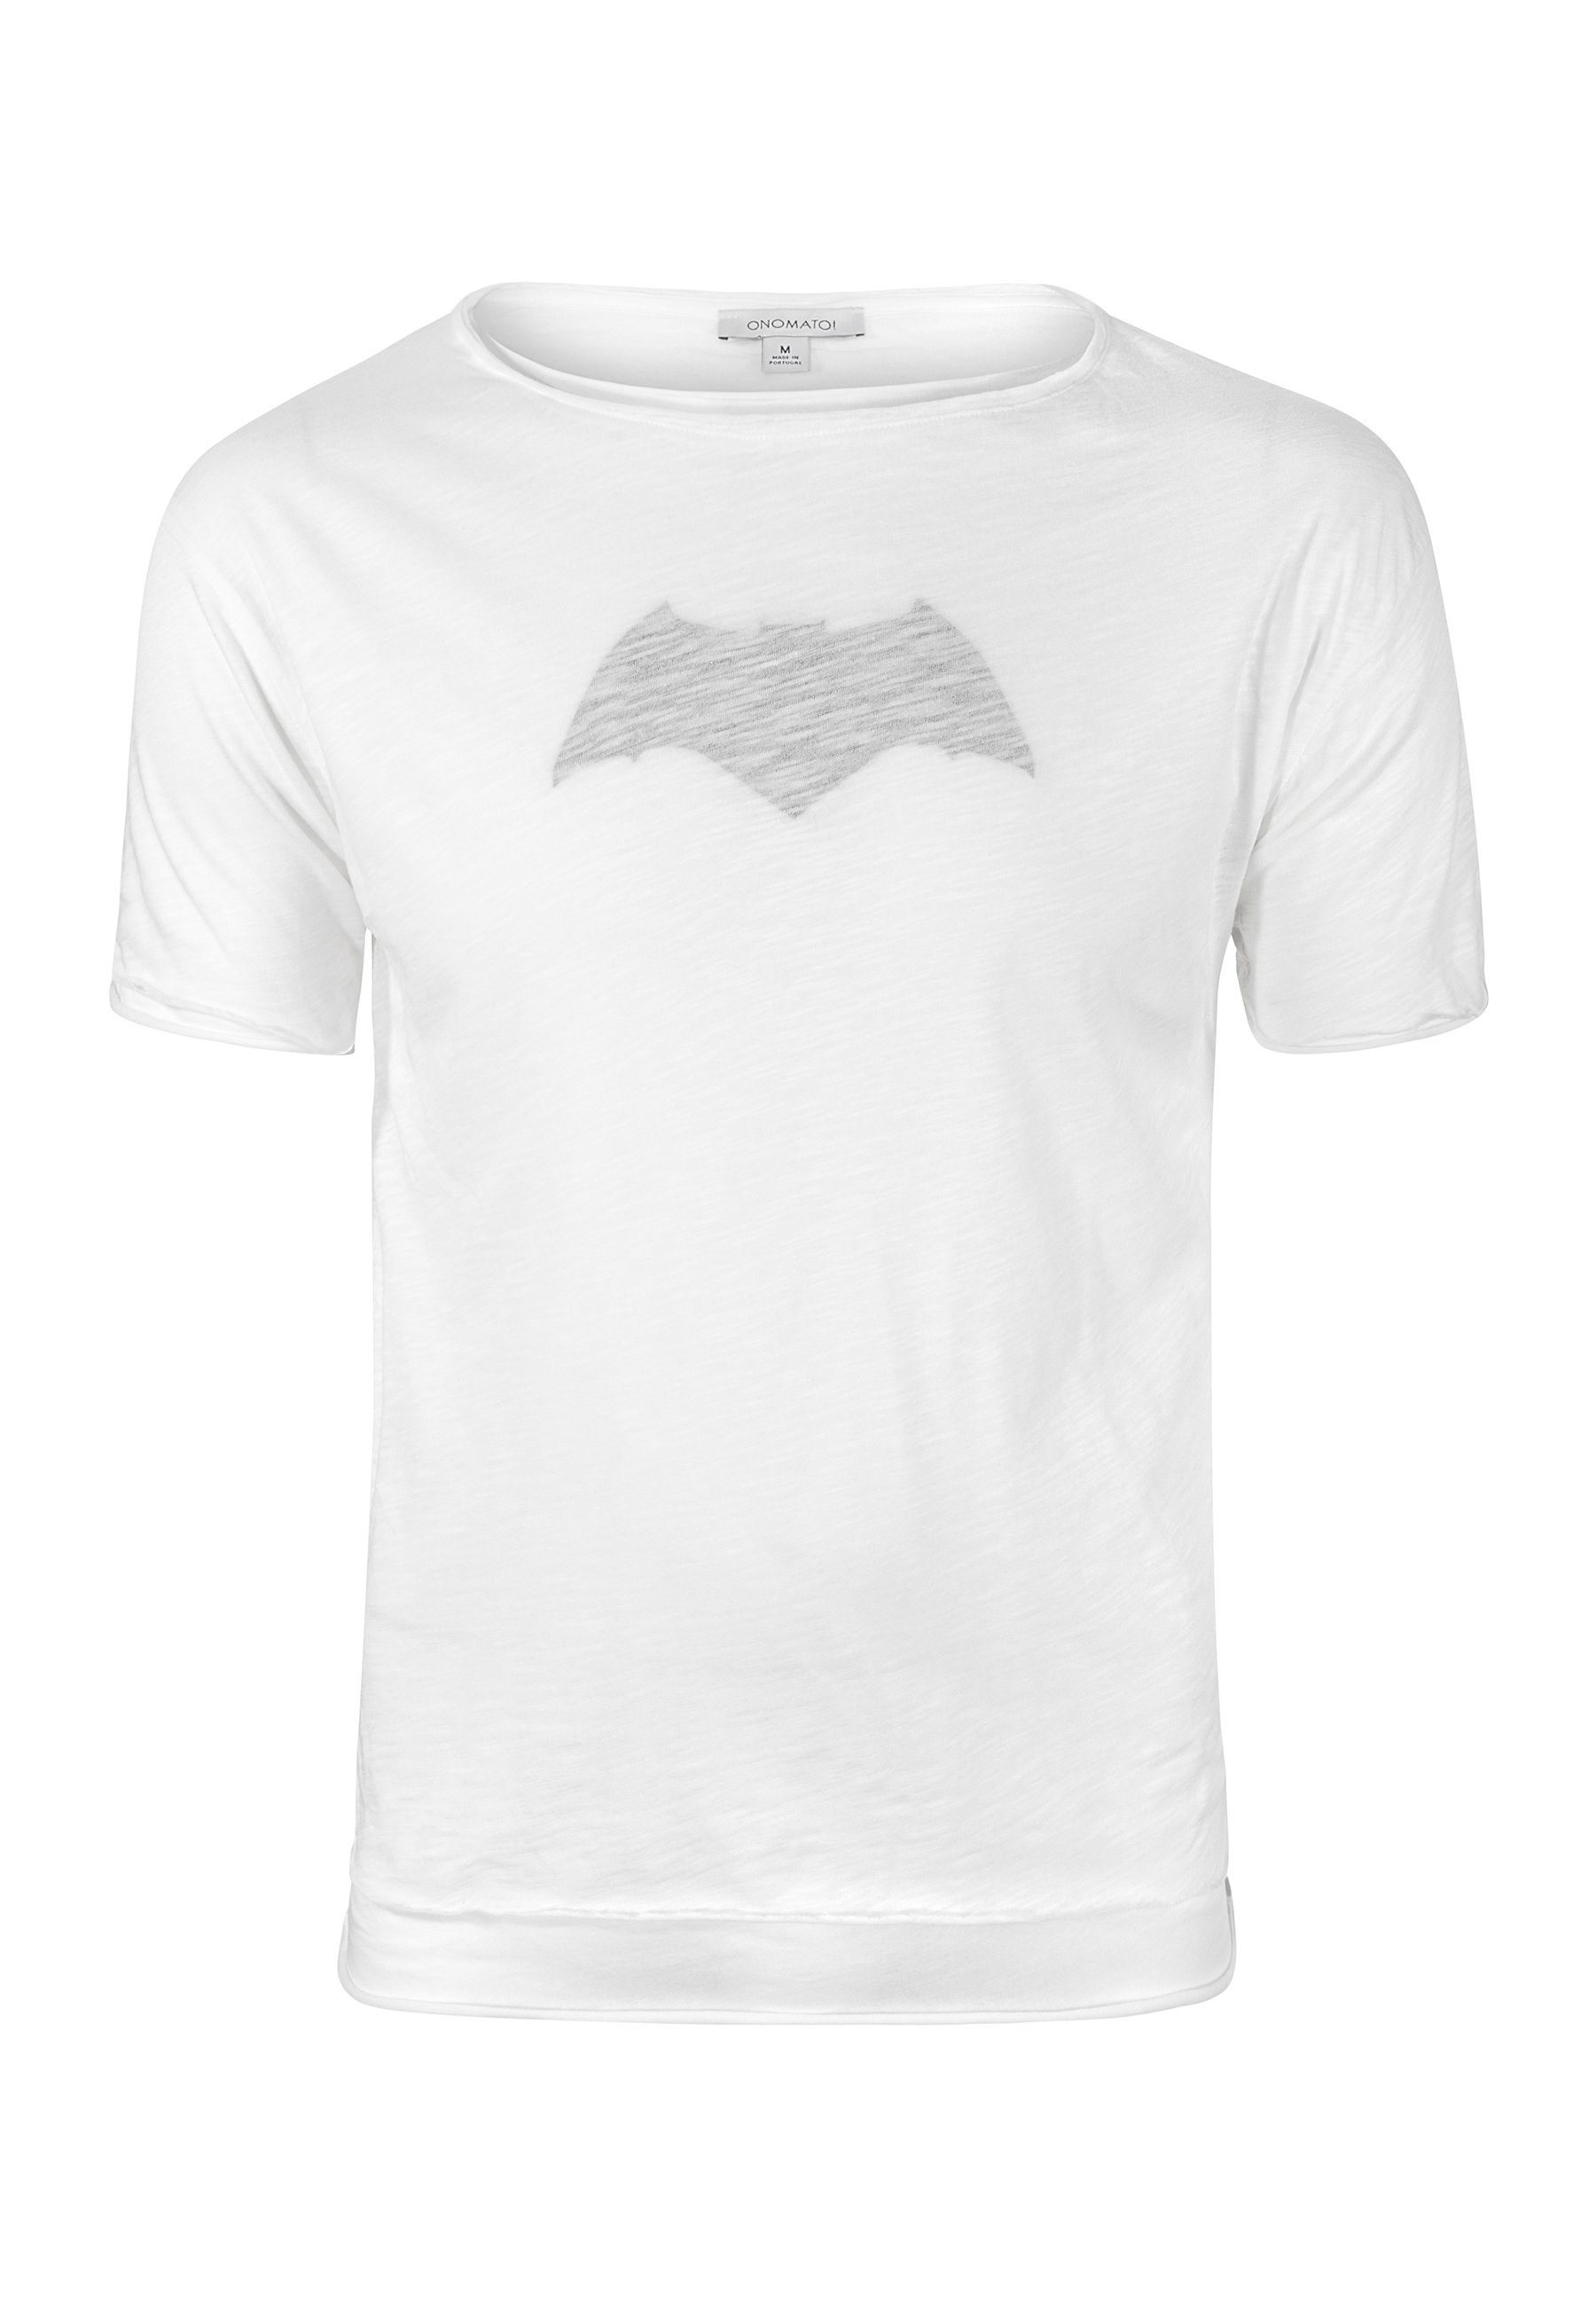 ONOMATO! T-Shirt Batman Herren T-Shirt Erwachsenen Kurzarm-Shirt Weiß Double Layer